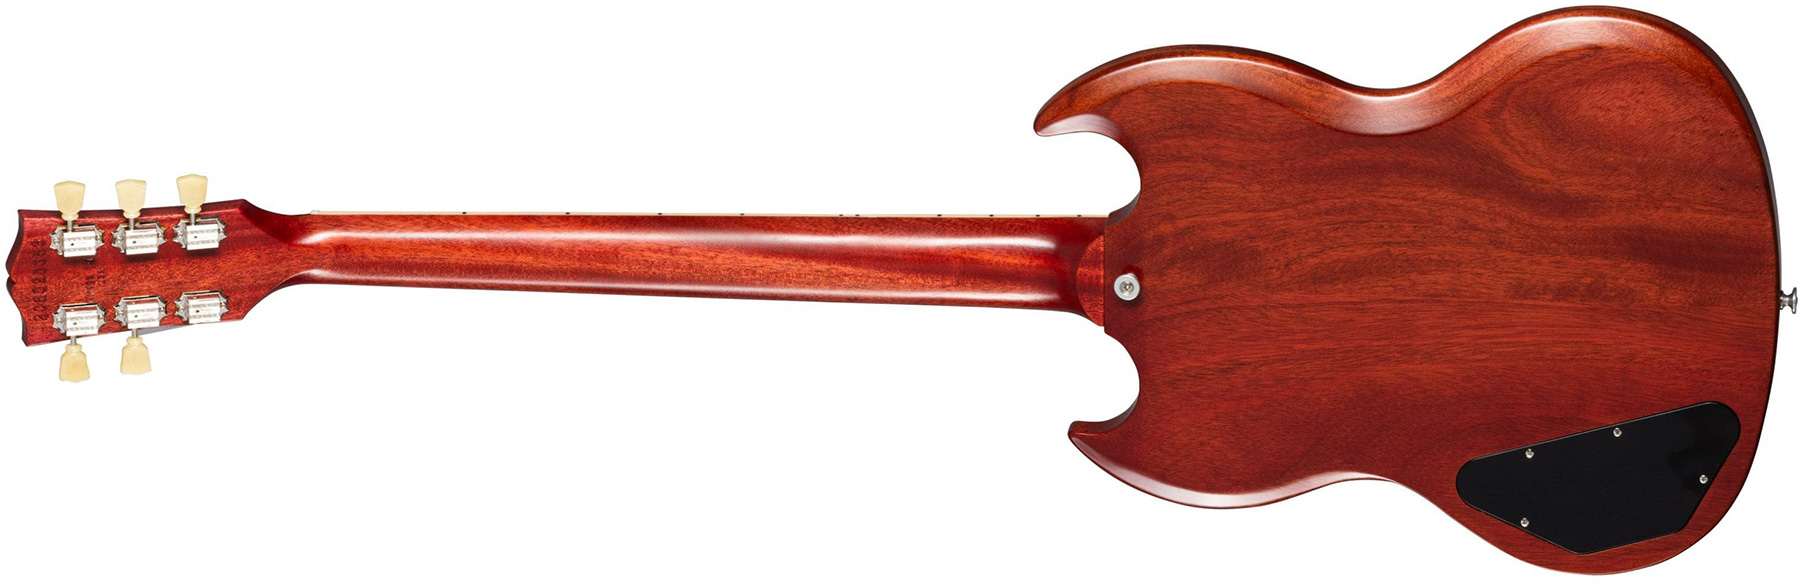 Gibson Sg Standard 1961 Faded Maestro Vibrola Original 2h Trem Rw - Vintage Cherry - Guitarra eléctrica de doble corte. - Variation 1